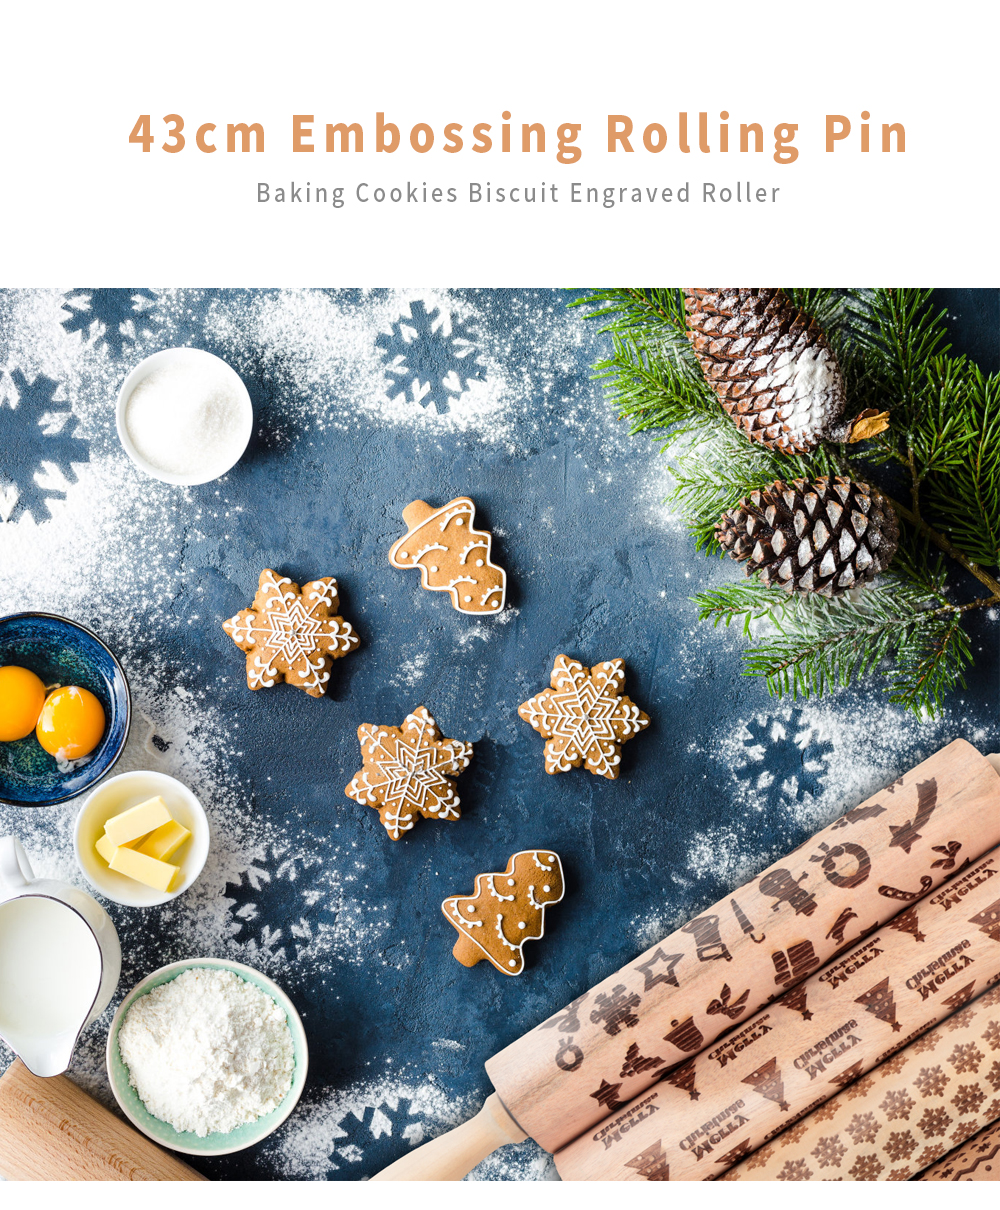 43cm Embossing Rolling Pin Baking Cookies Biscuit Engraved Roller